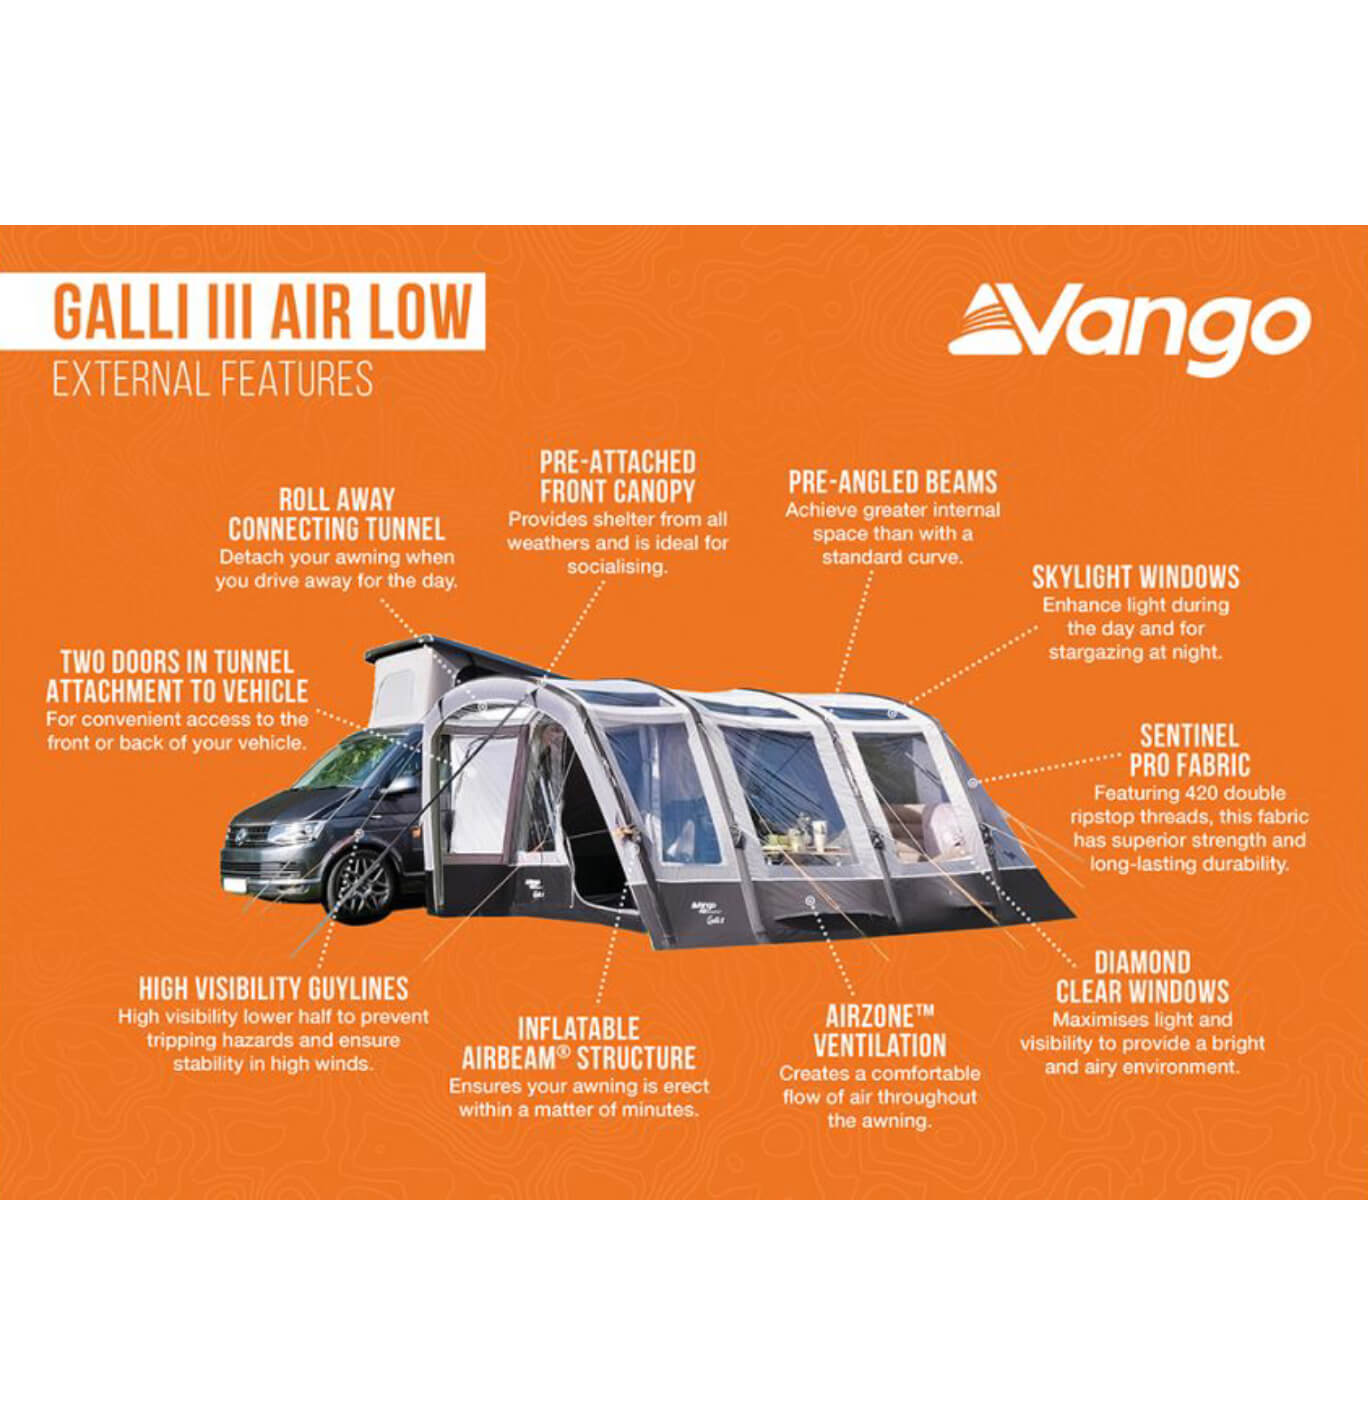 Vango Galli III Low AirWay Drive Away Awning Image